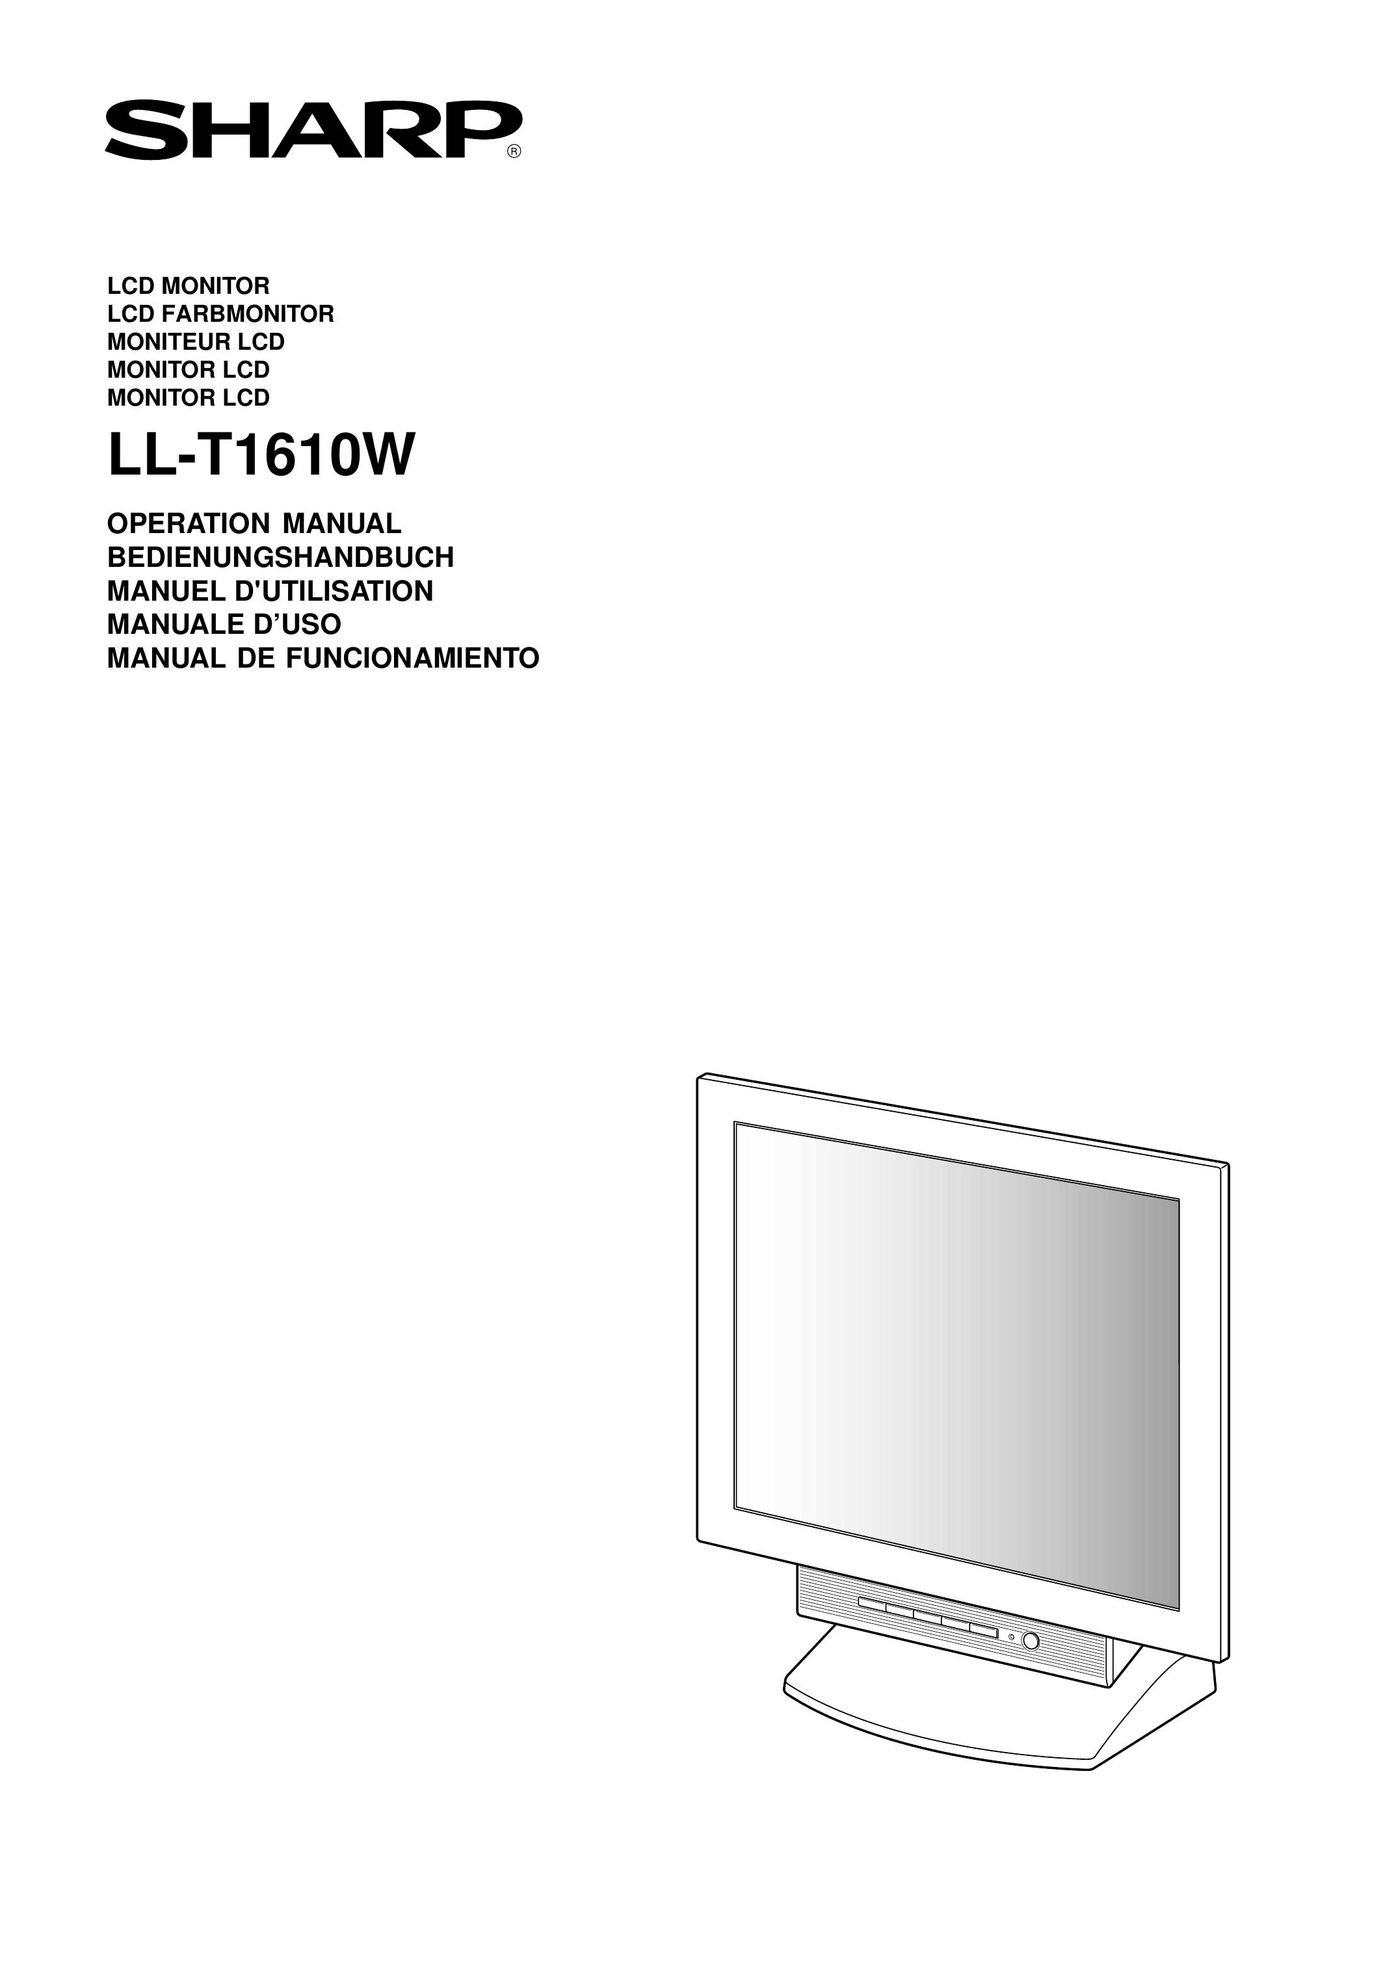 Sharp LL-T1610W Computer Monitor User Manual